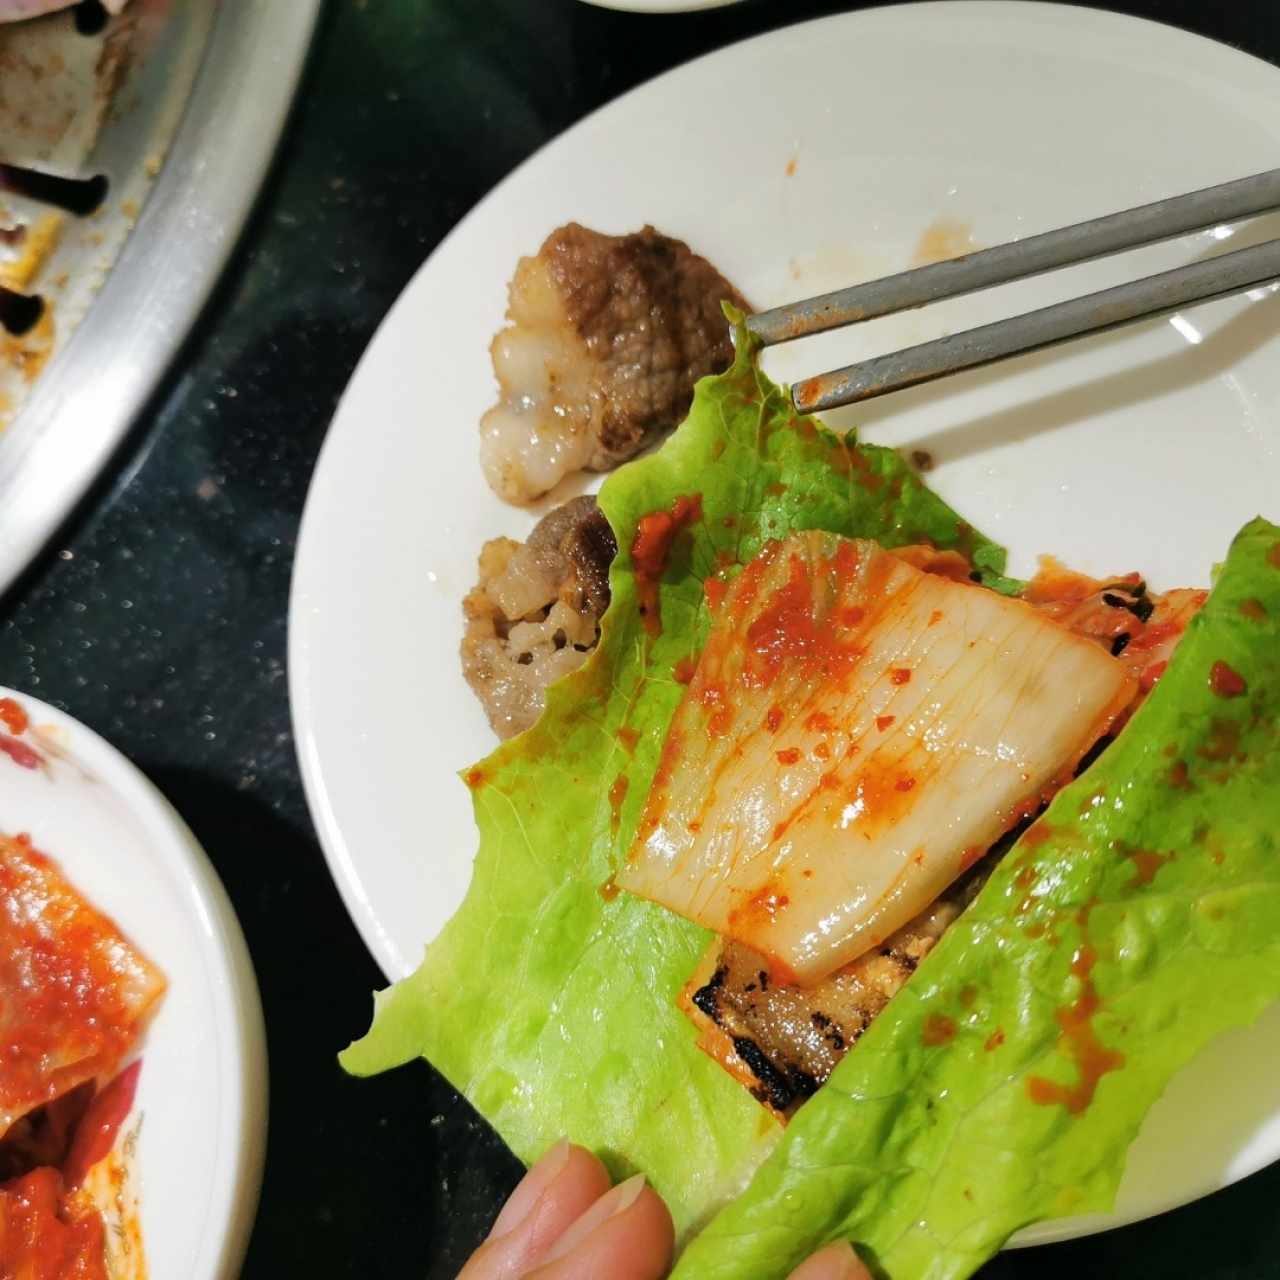 Lechuga, kimchi + carne y costilla 😍✅💯👍